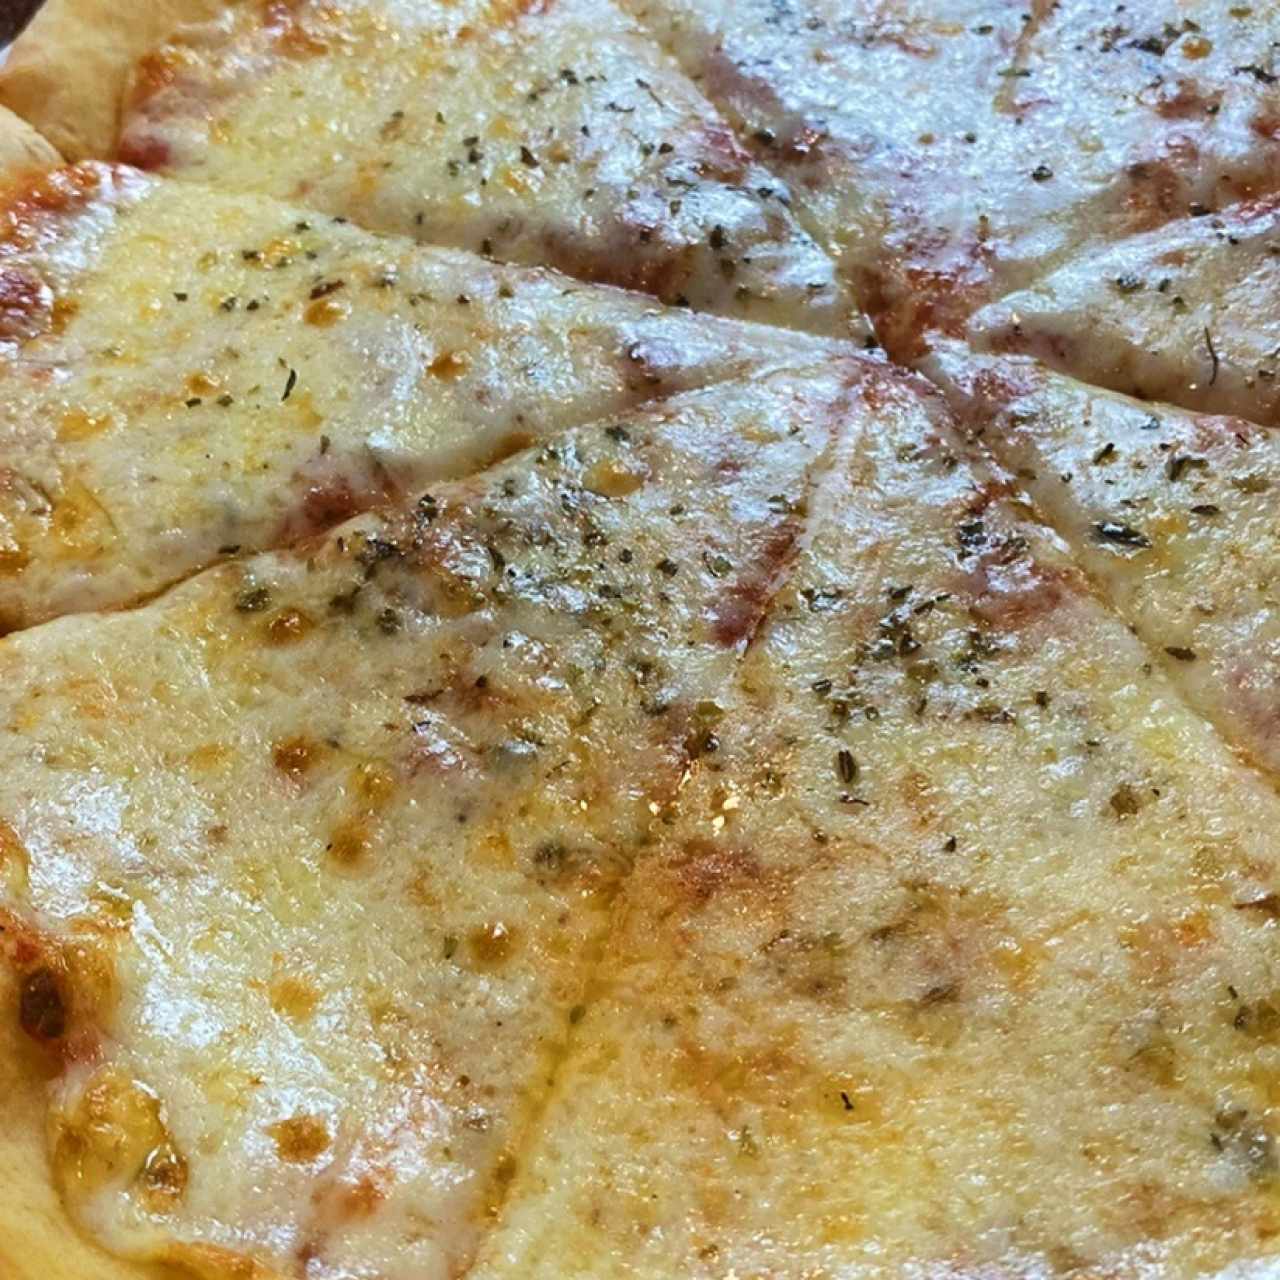 Pizzas - Margherita